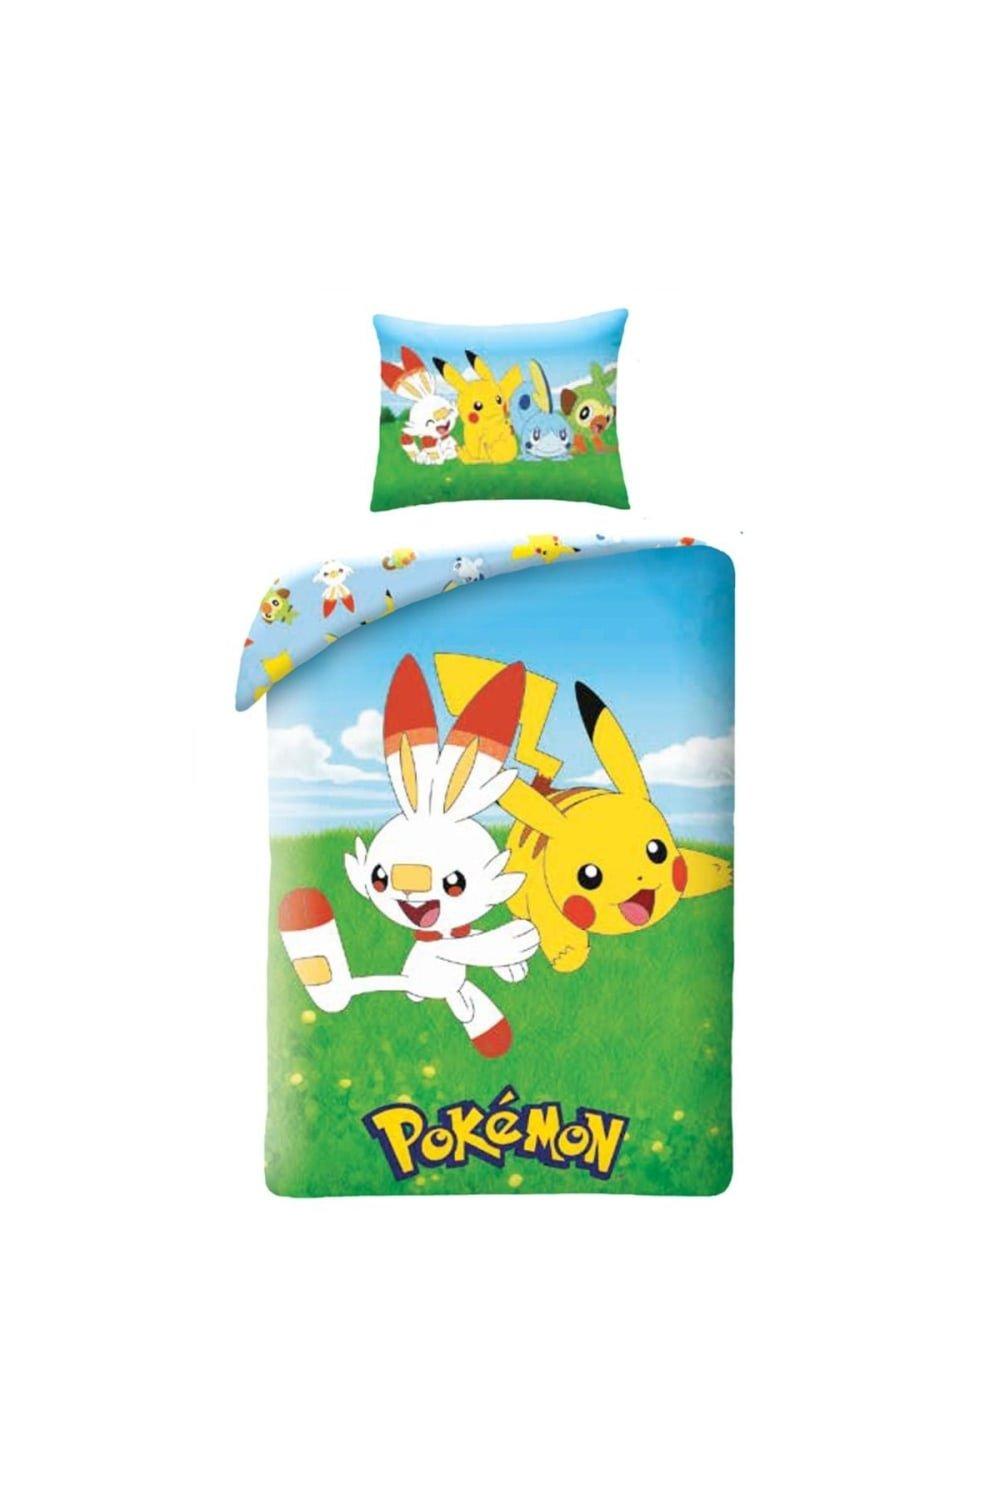 Pikachu & Friends Duvet Cover Set